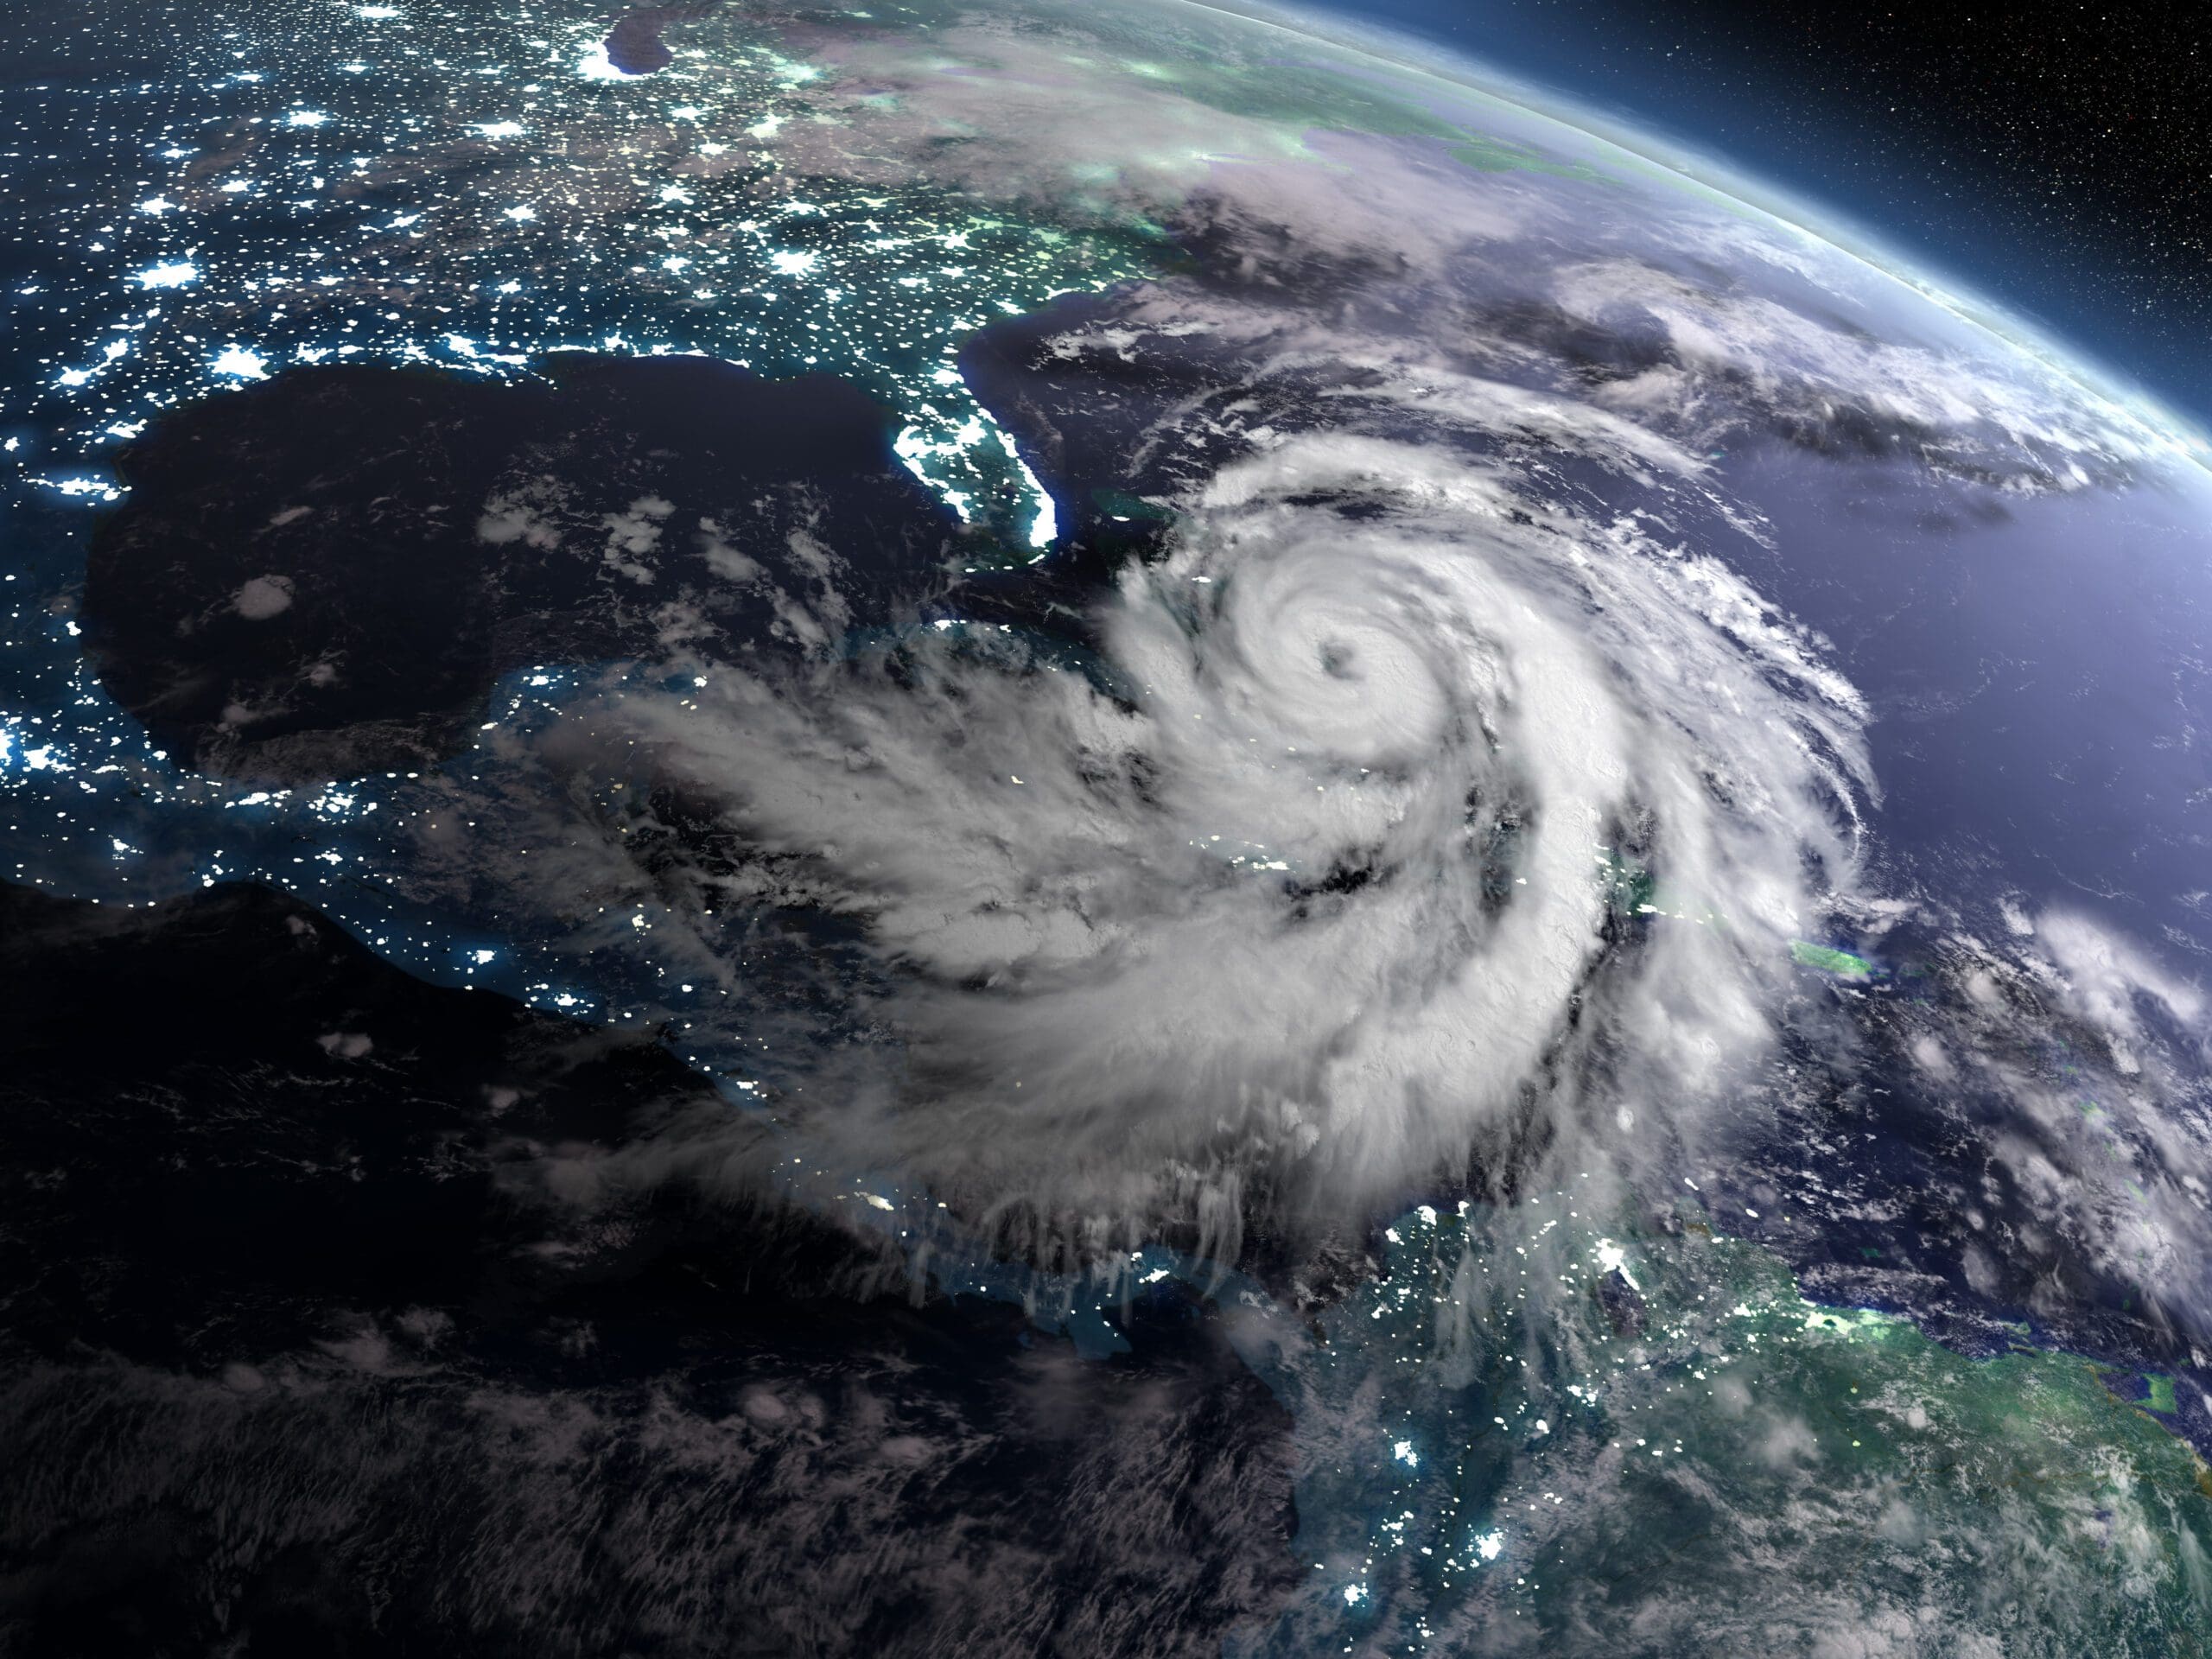 Hurricane Satellite Phone - Disaster Communications • Apollo Satellite